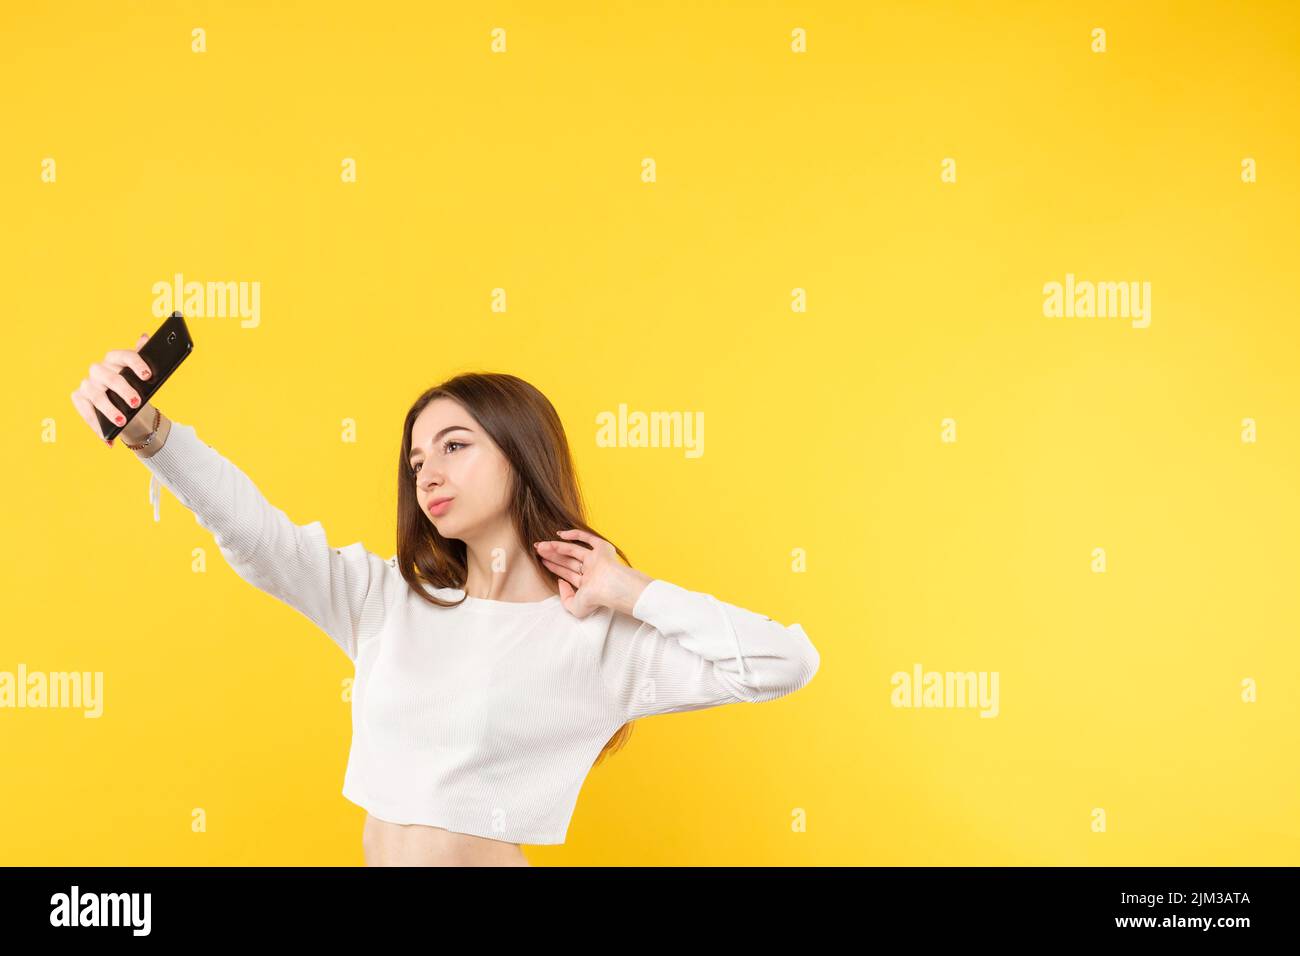 woman selfie trends millennial lifestyle yellow Stock Photo